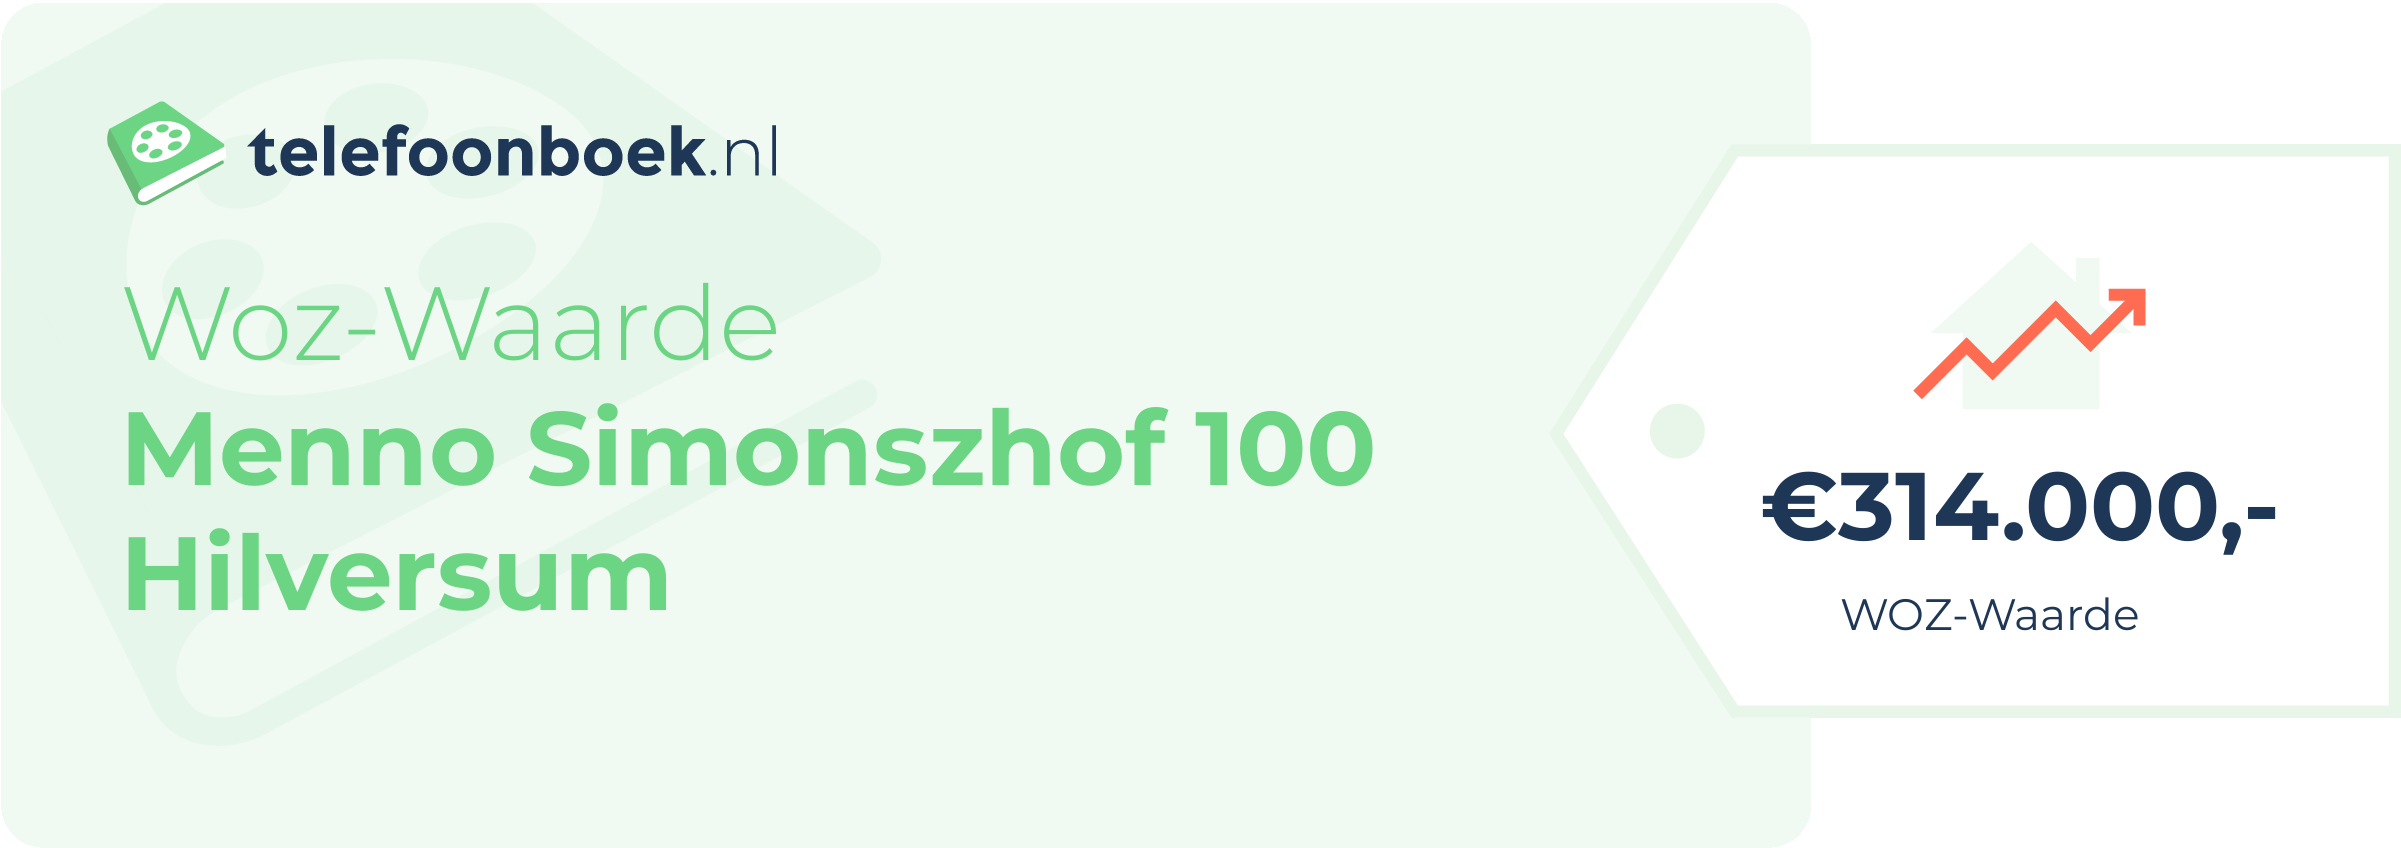 WOZ-waarde Menno Simonszhof 100 Hilversum